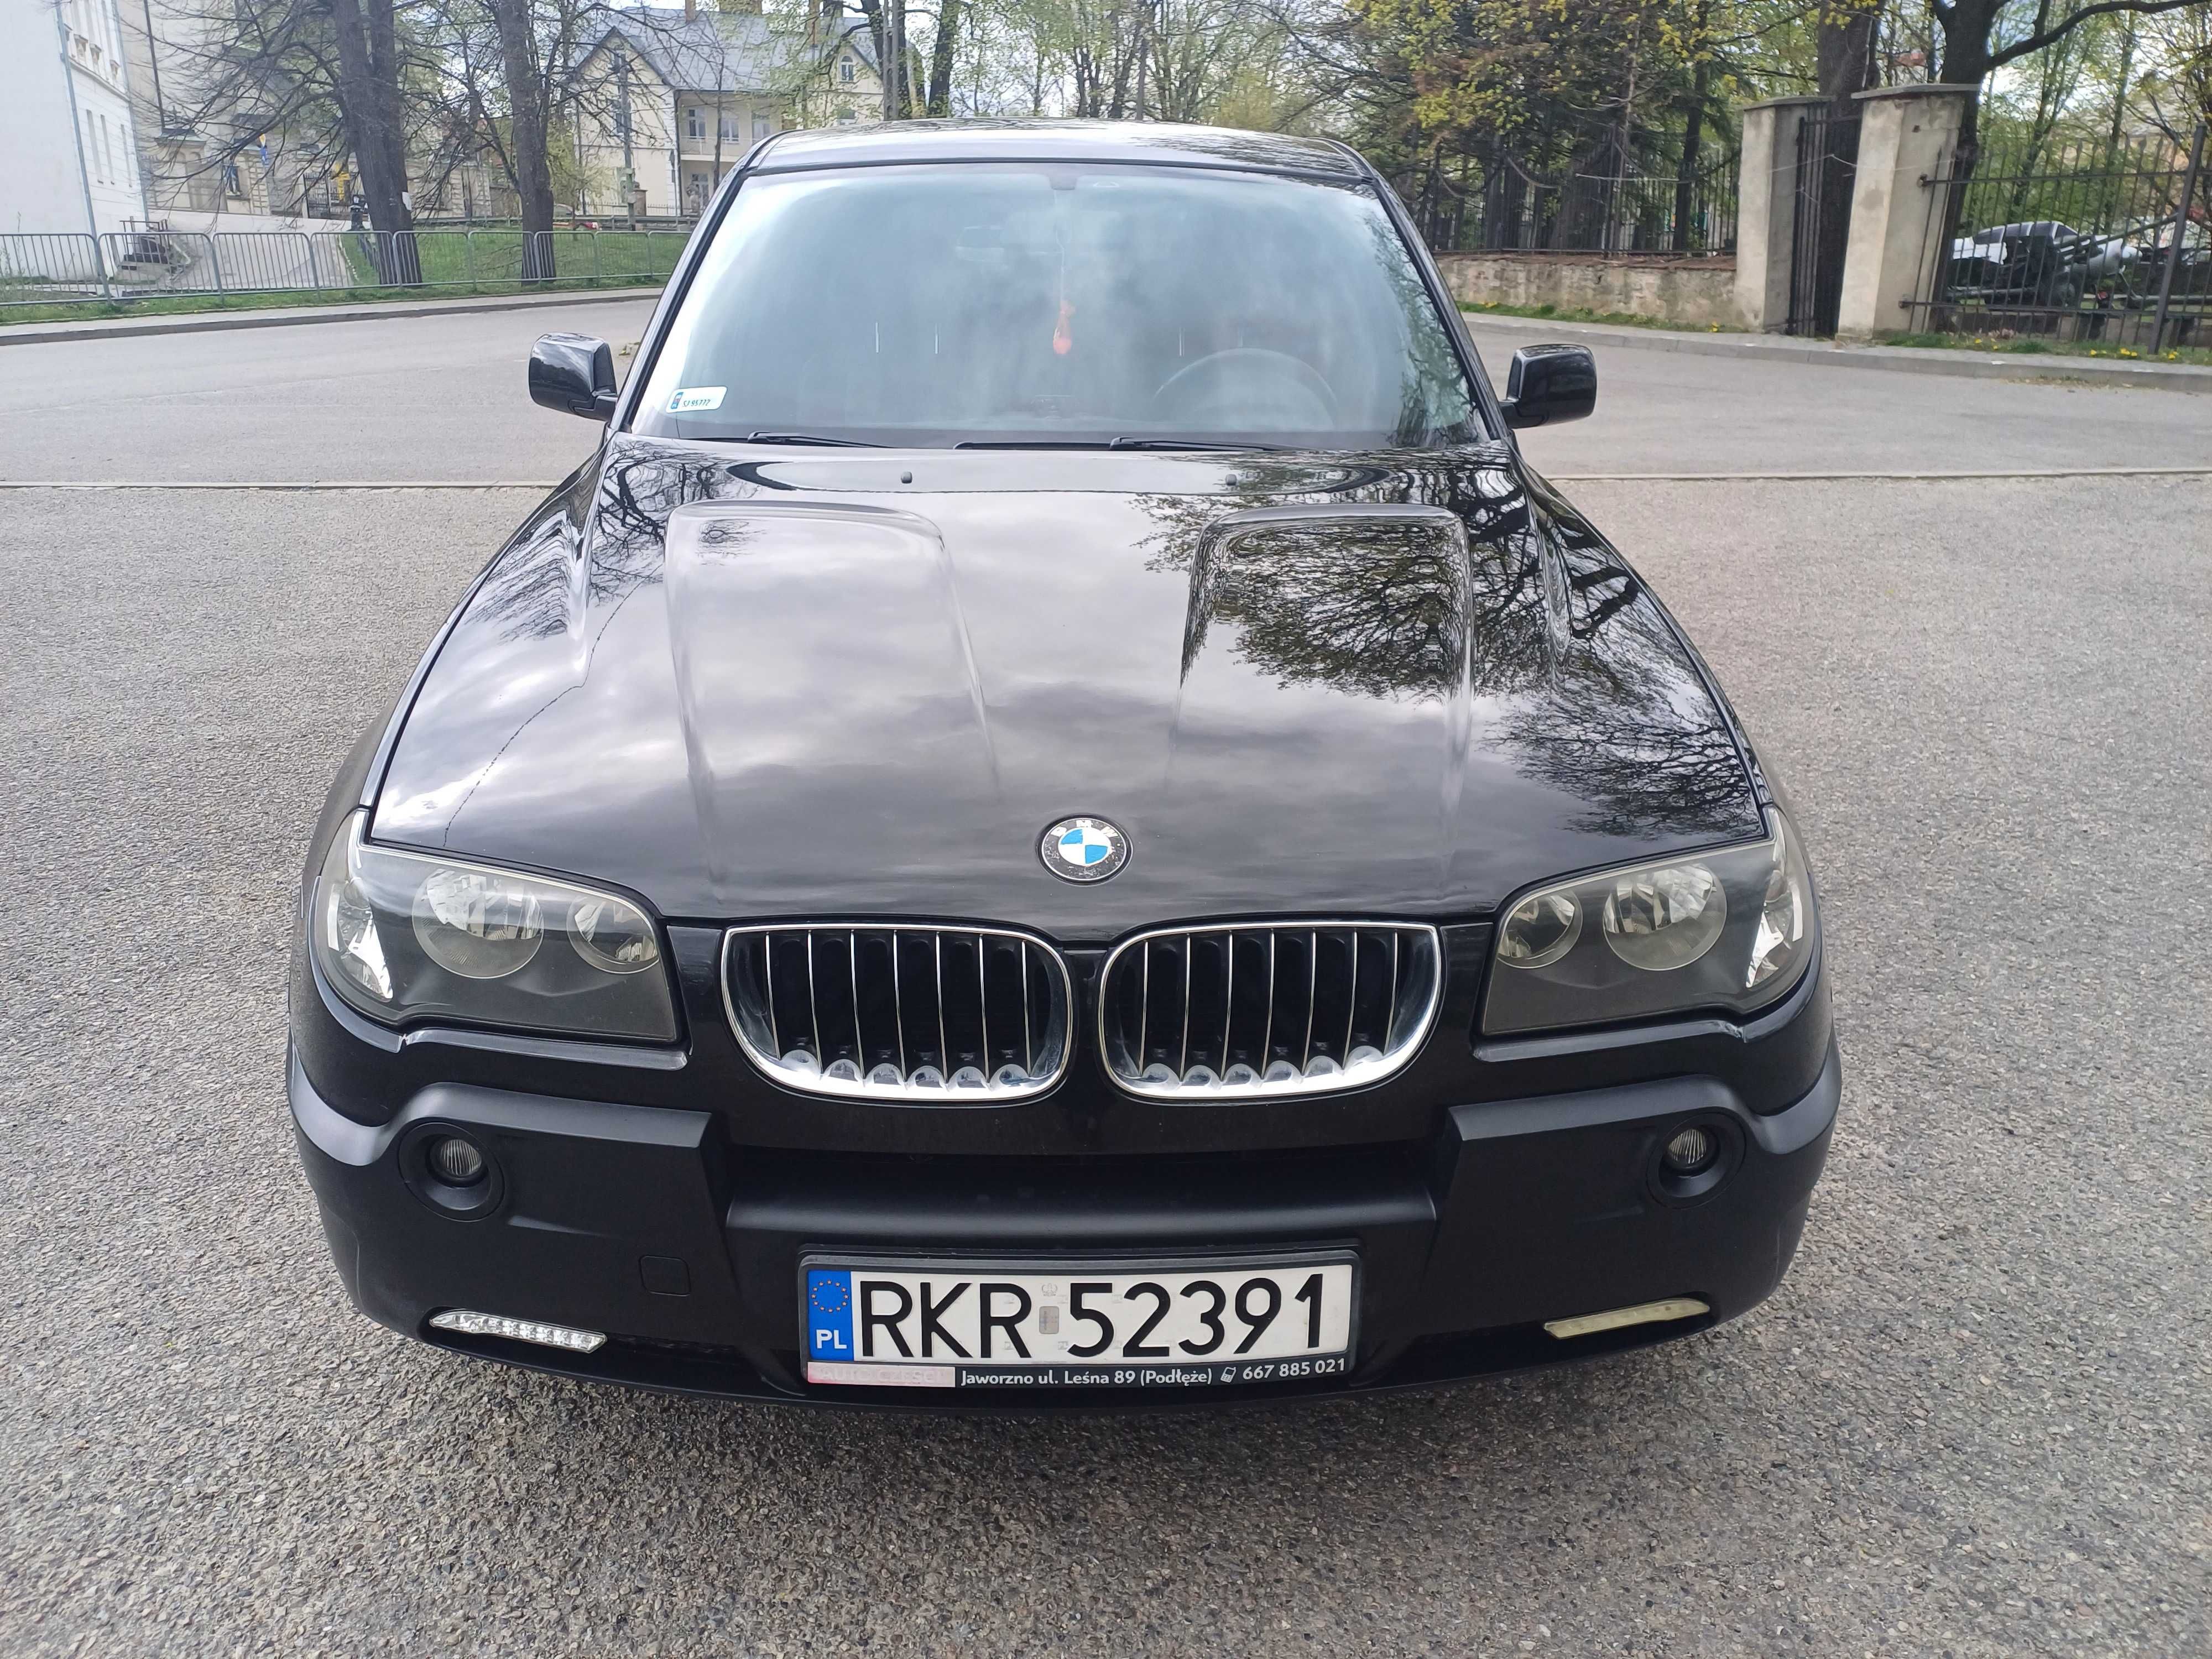 BMW X3 manual 3.0 diesel 204 KM